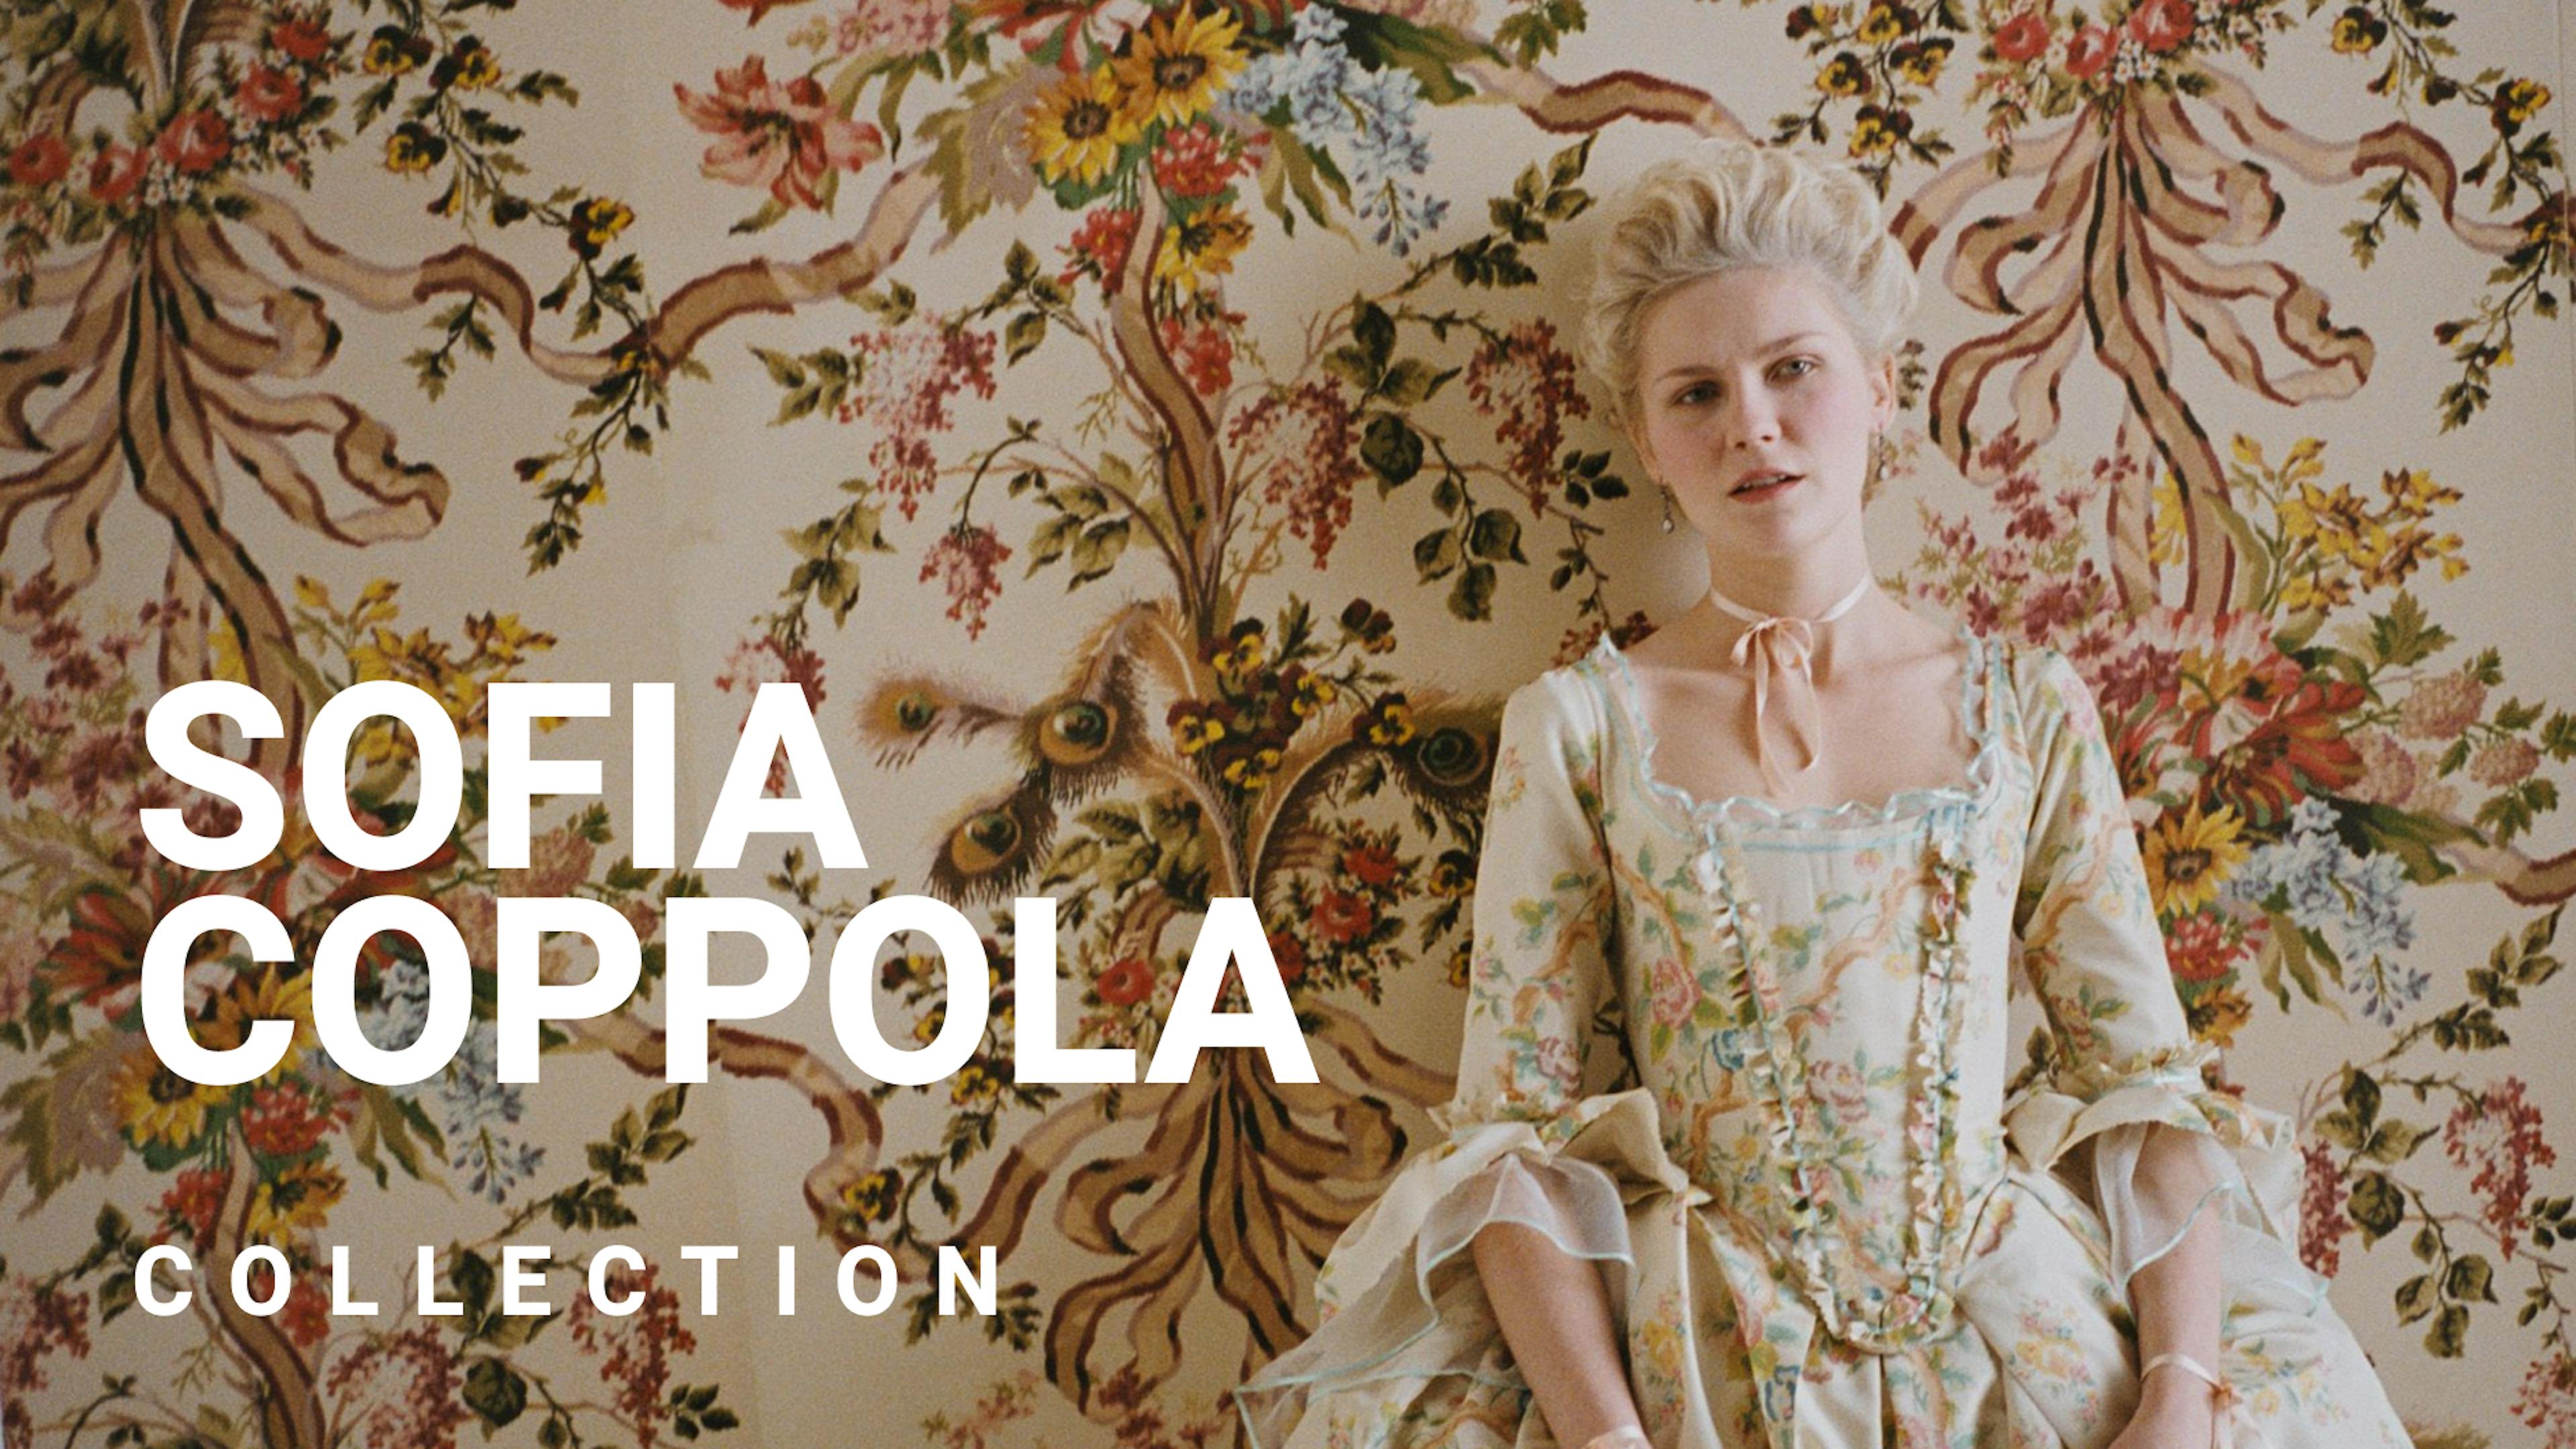 Les films de Sofia Coppola